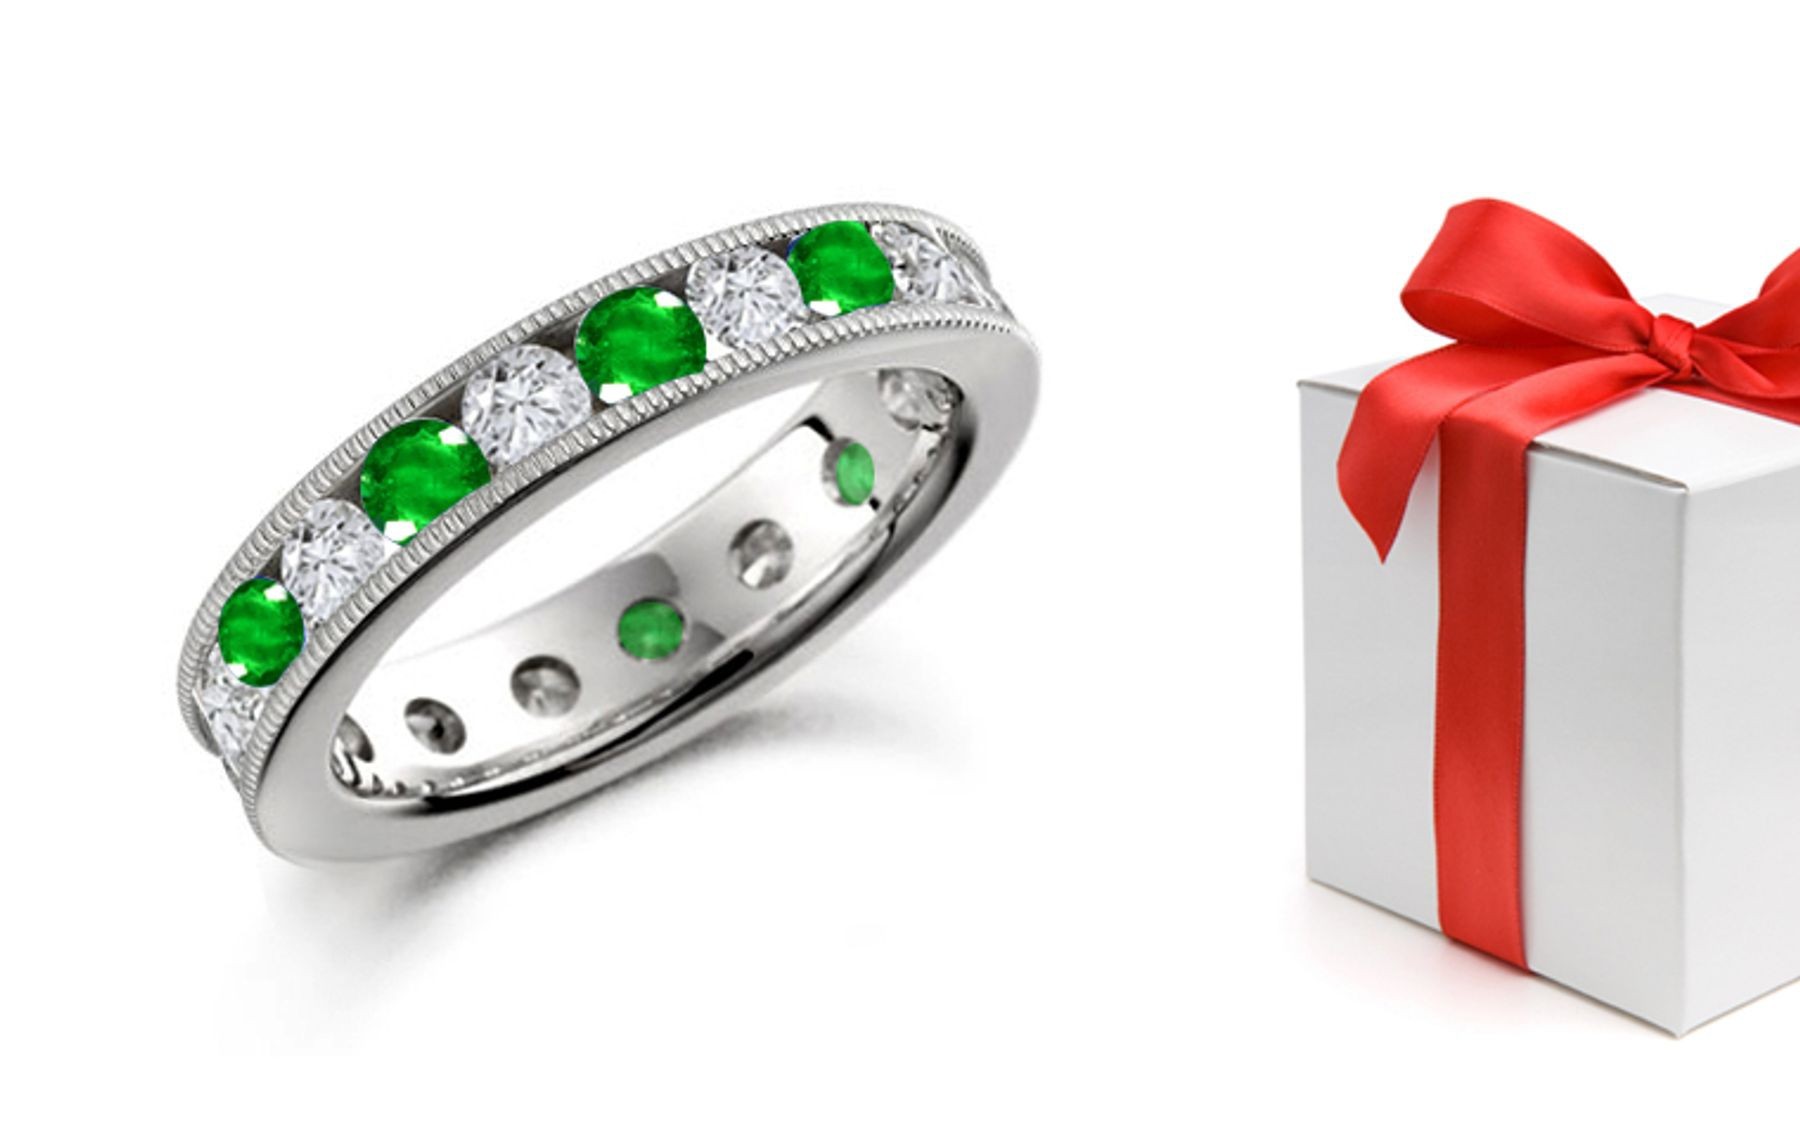 ORIGINAL DESIGN: Channel Set Gold Emerald & Diamond Eternity Ring in Star Lit Platinum & Yellow & White 14k Gold